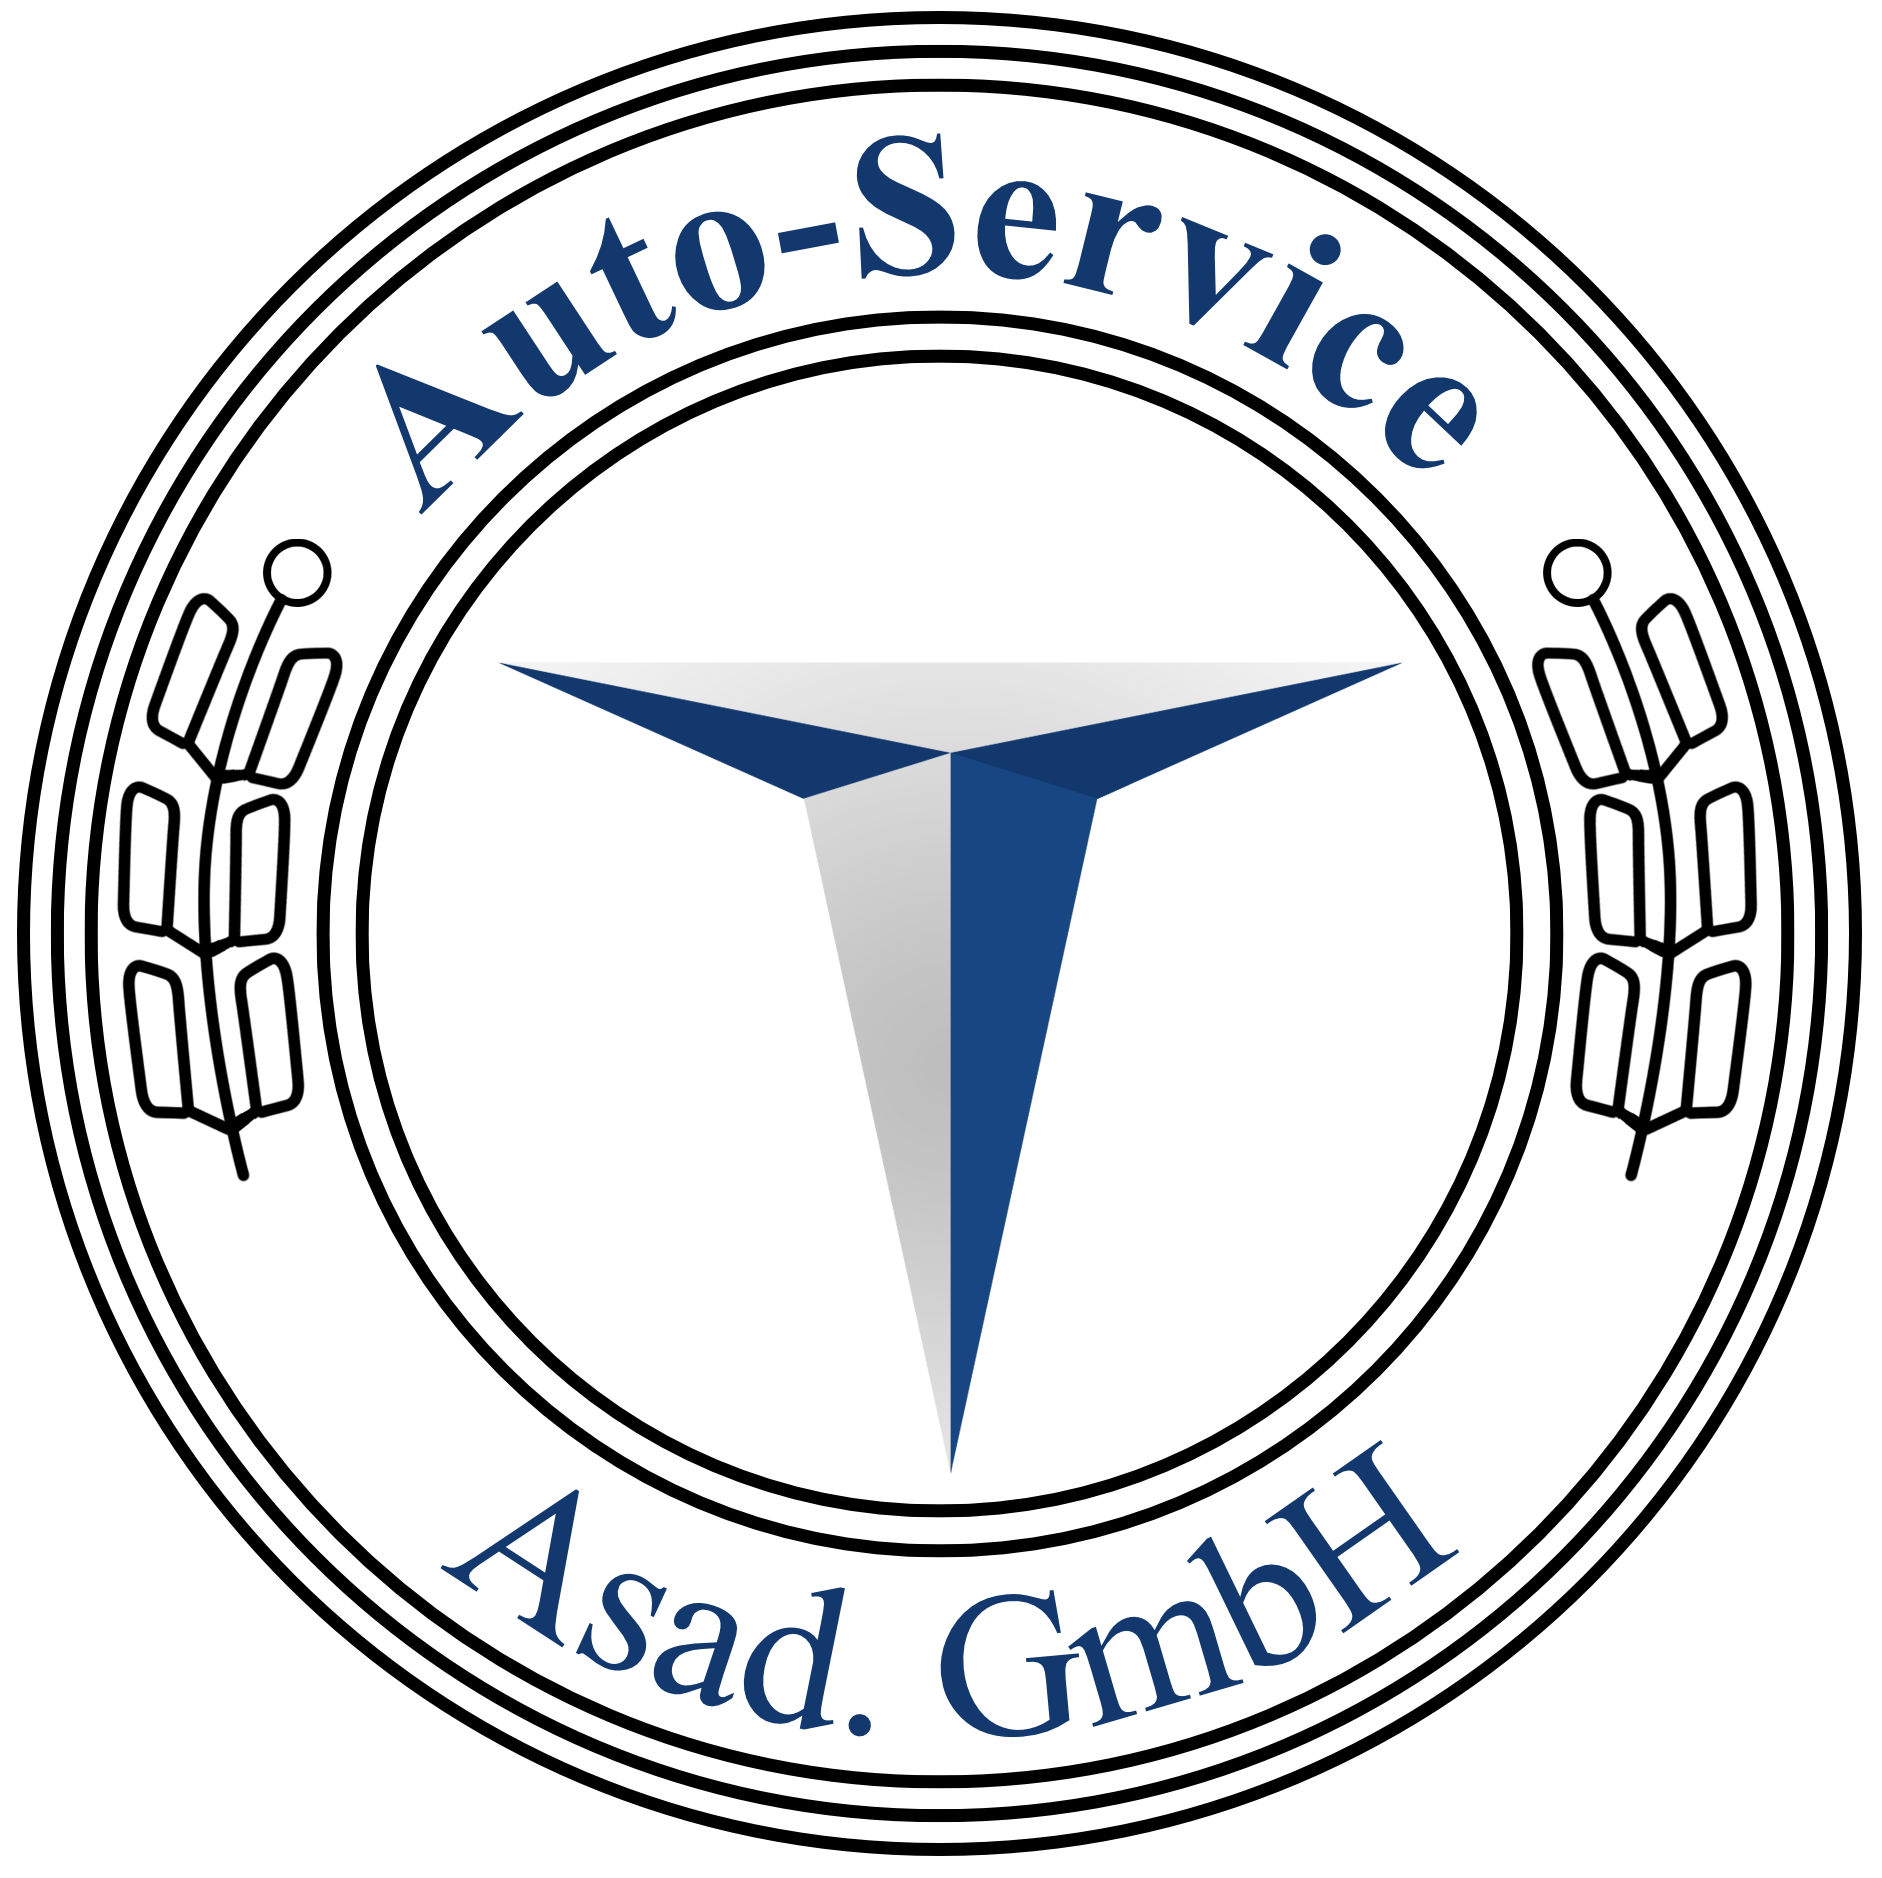 Auto Service Asad GmbH seit 1978 logo